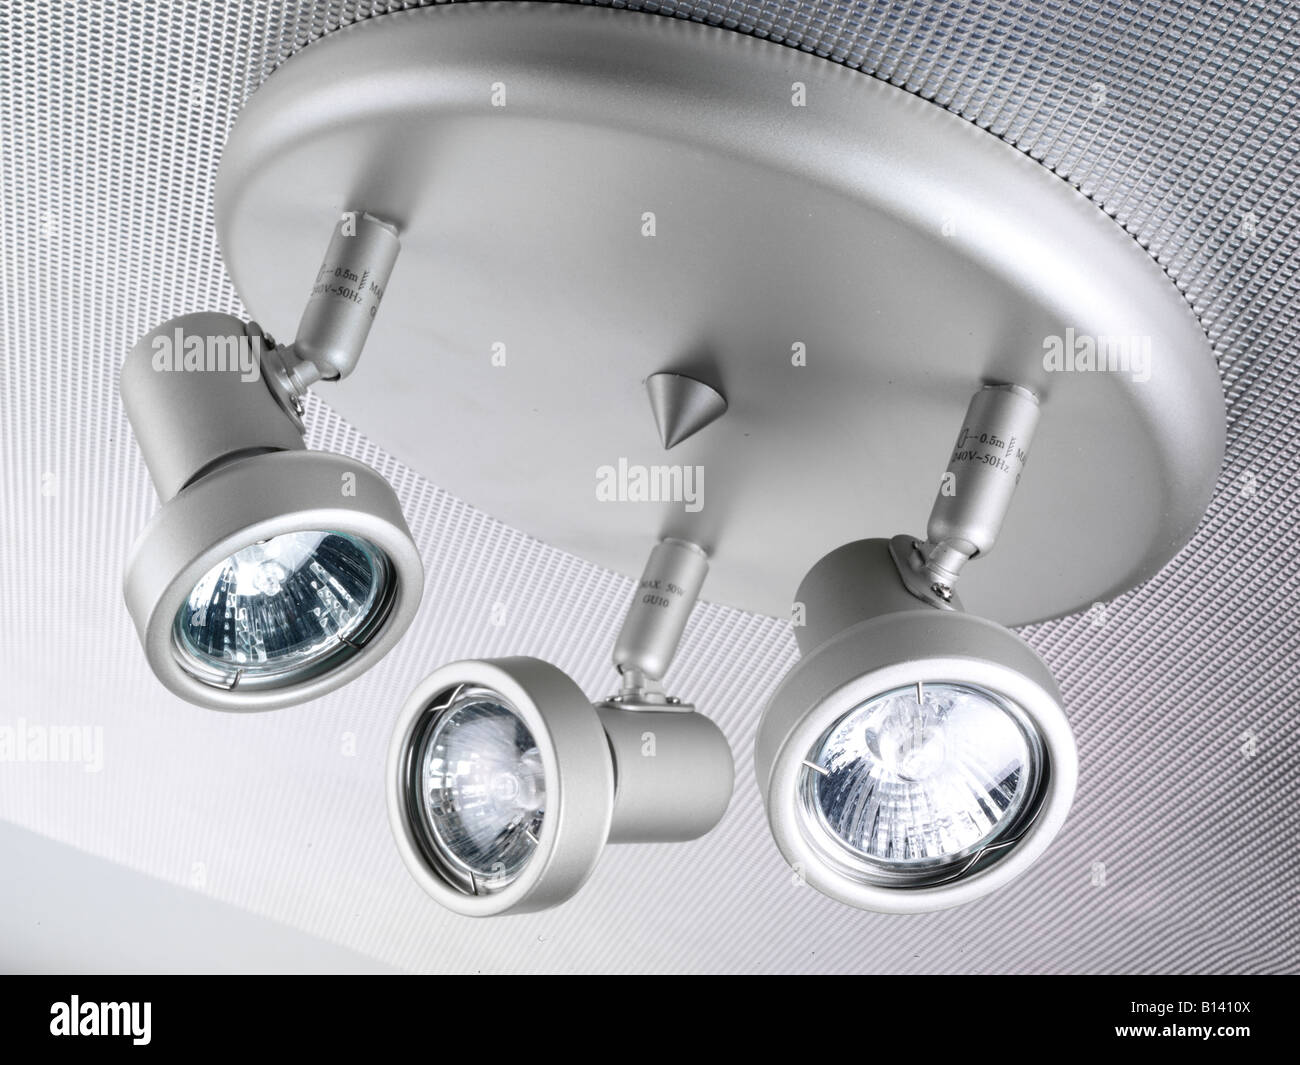 Halogen Ceiling Spotlights Stock Photo 17913642 Alamy